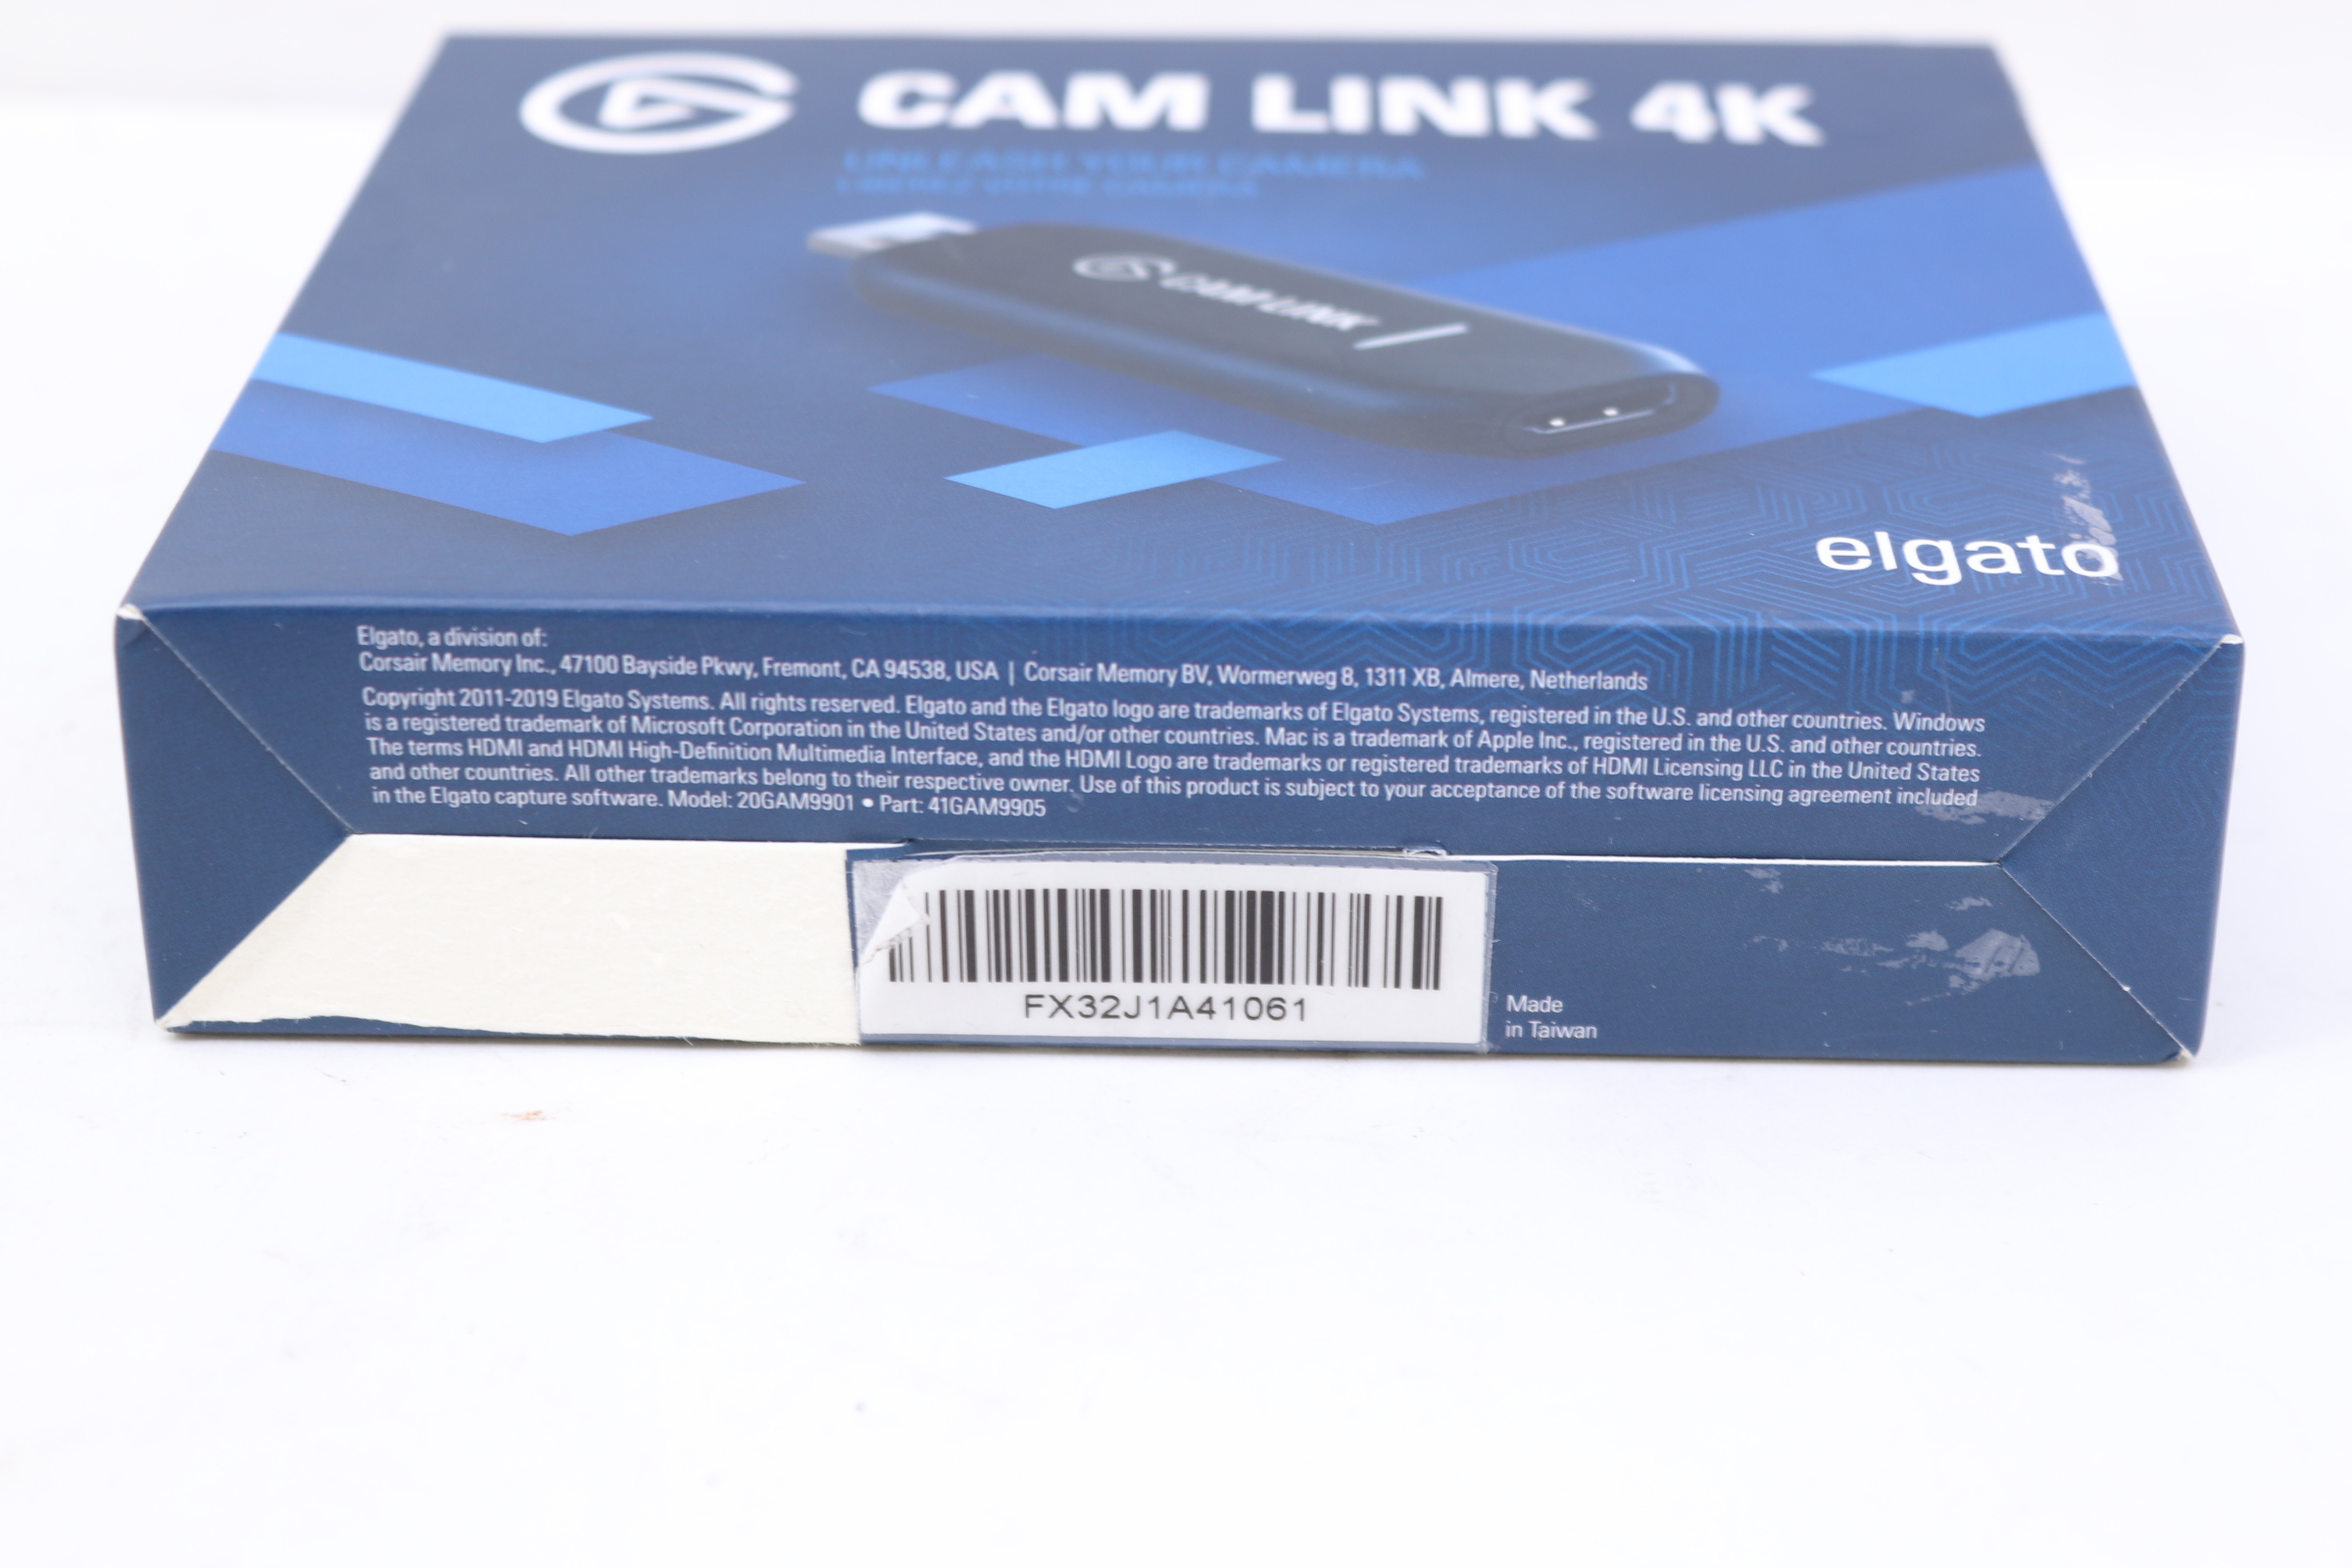 Cheap capture cards vs the Elgato Cam Link 4K